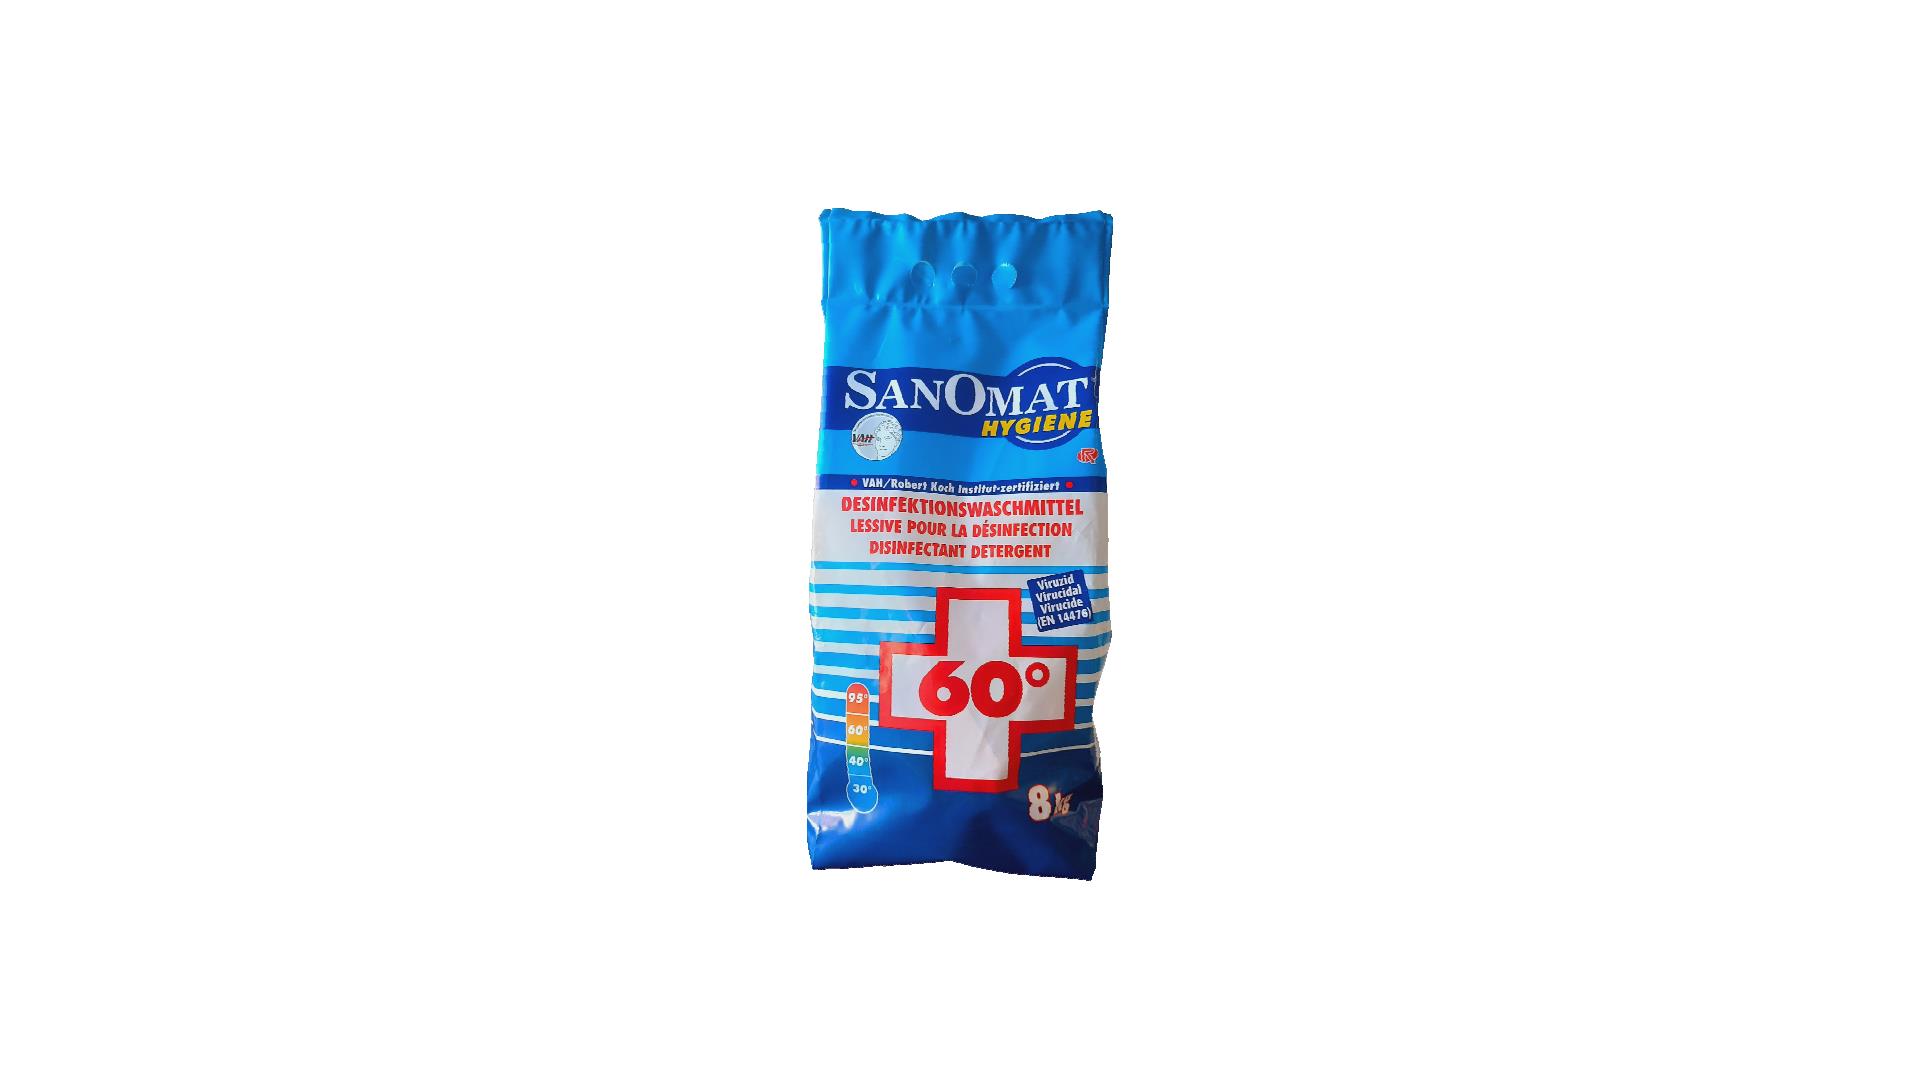 SANOMAT Hygiene Desinfektionswaschmittel, 8 kg Sack